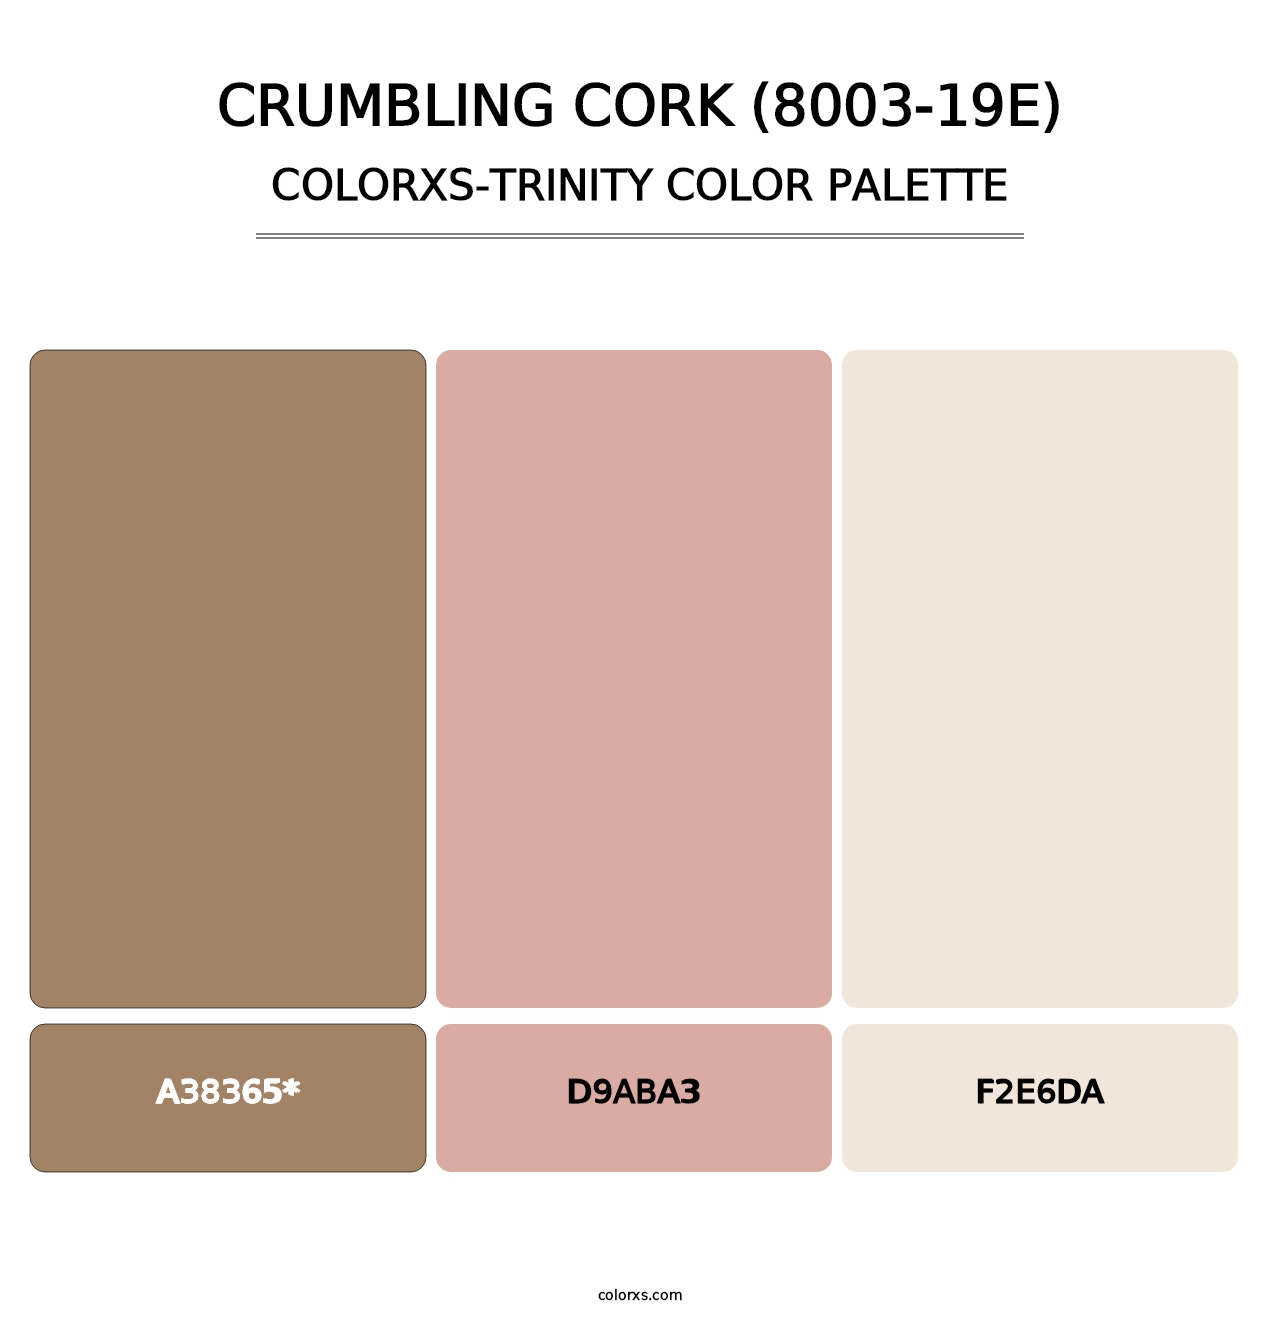 Crumbling Cork (8003-19E) - Colorxs Trinity Palette